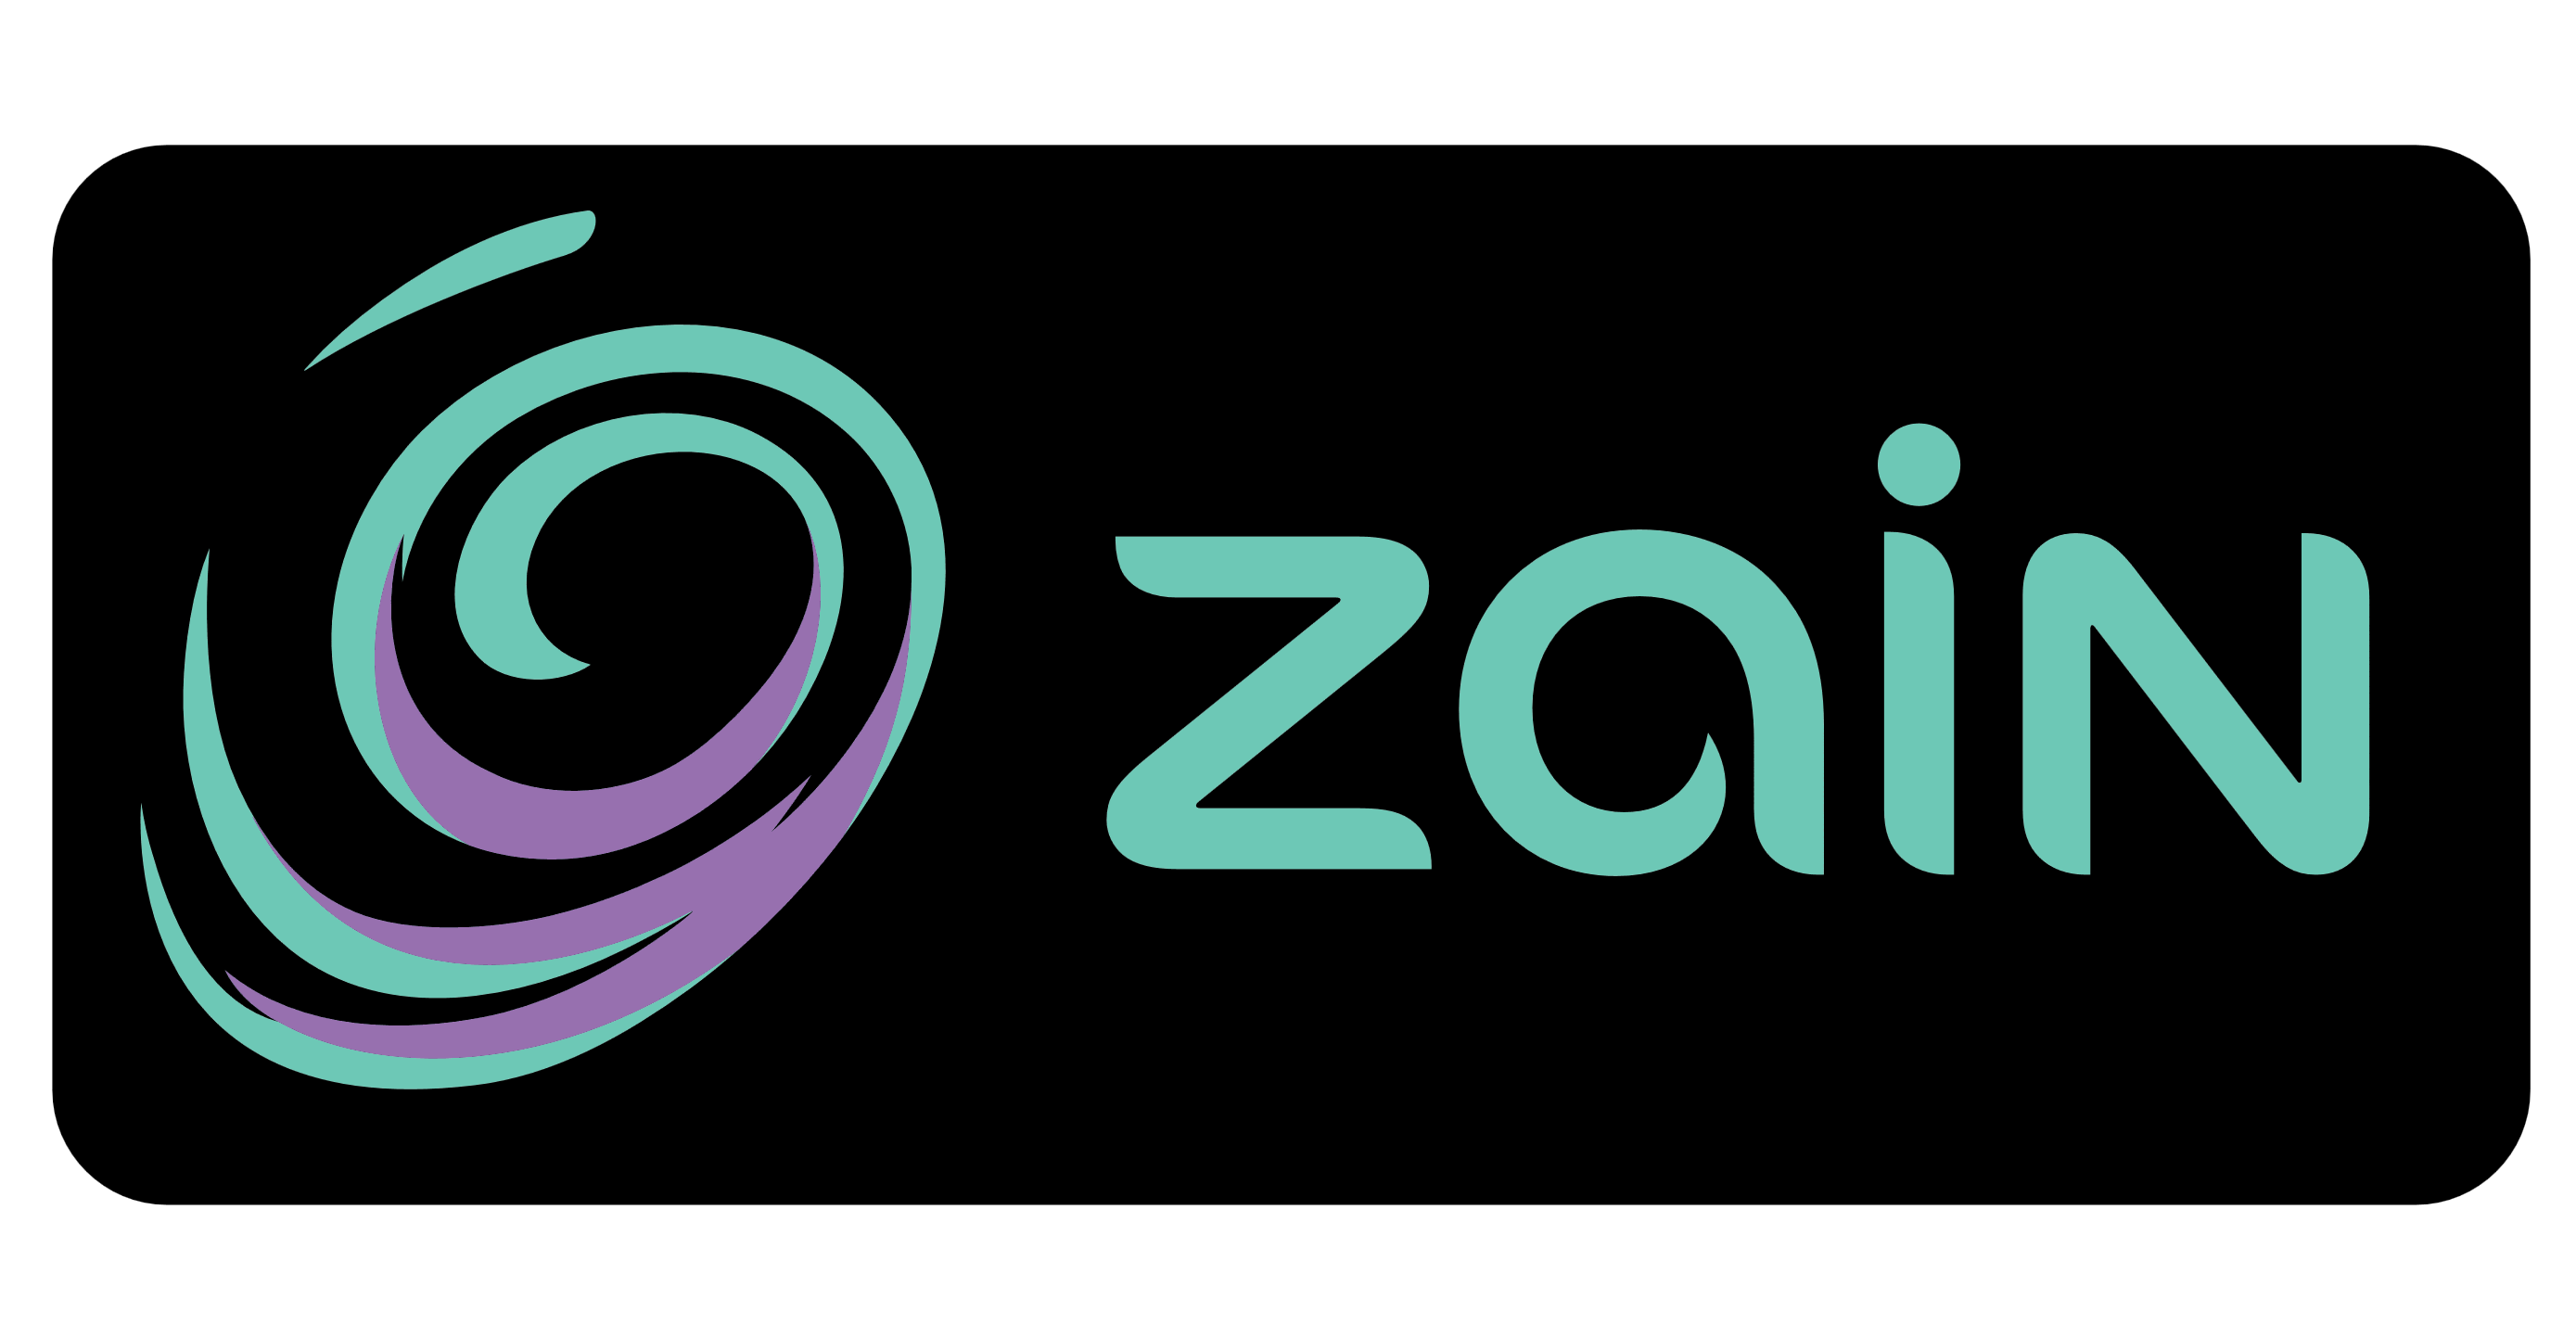 Zain logo, logotype